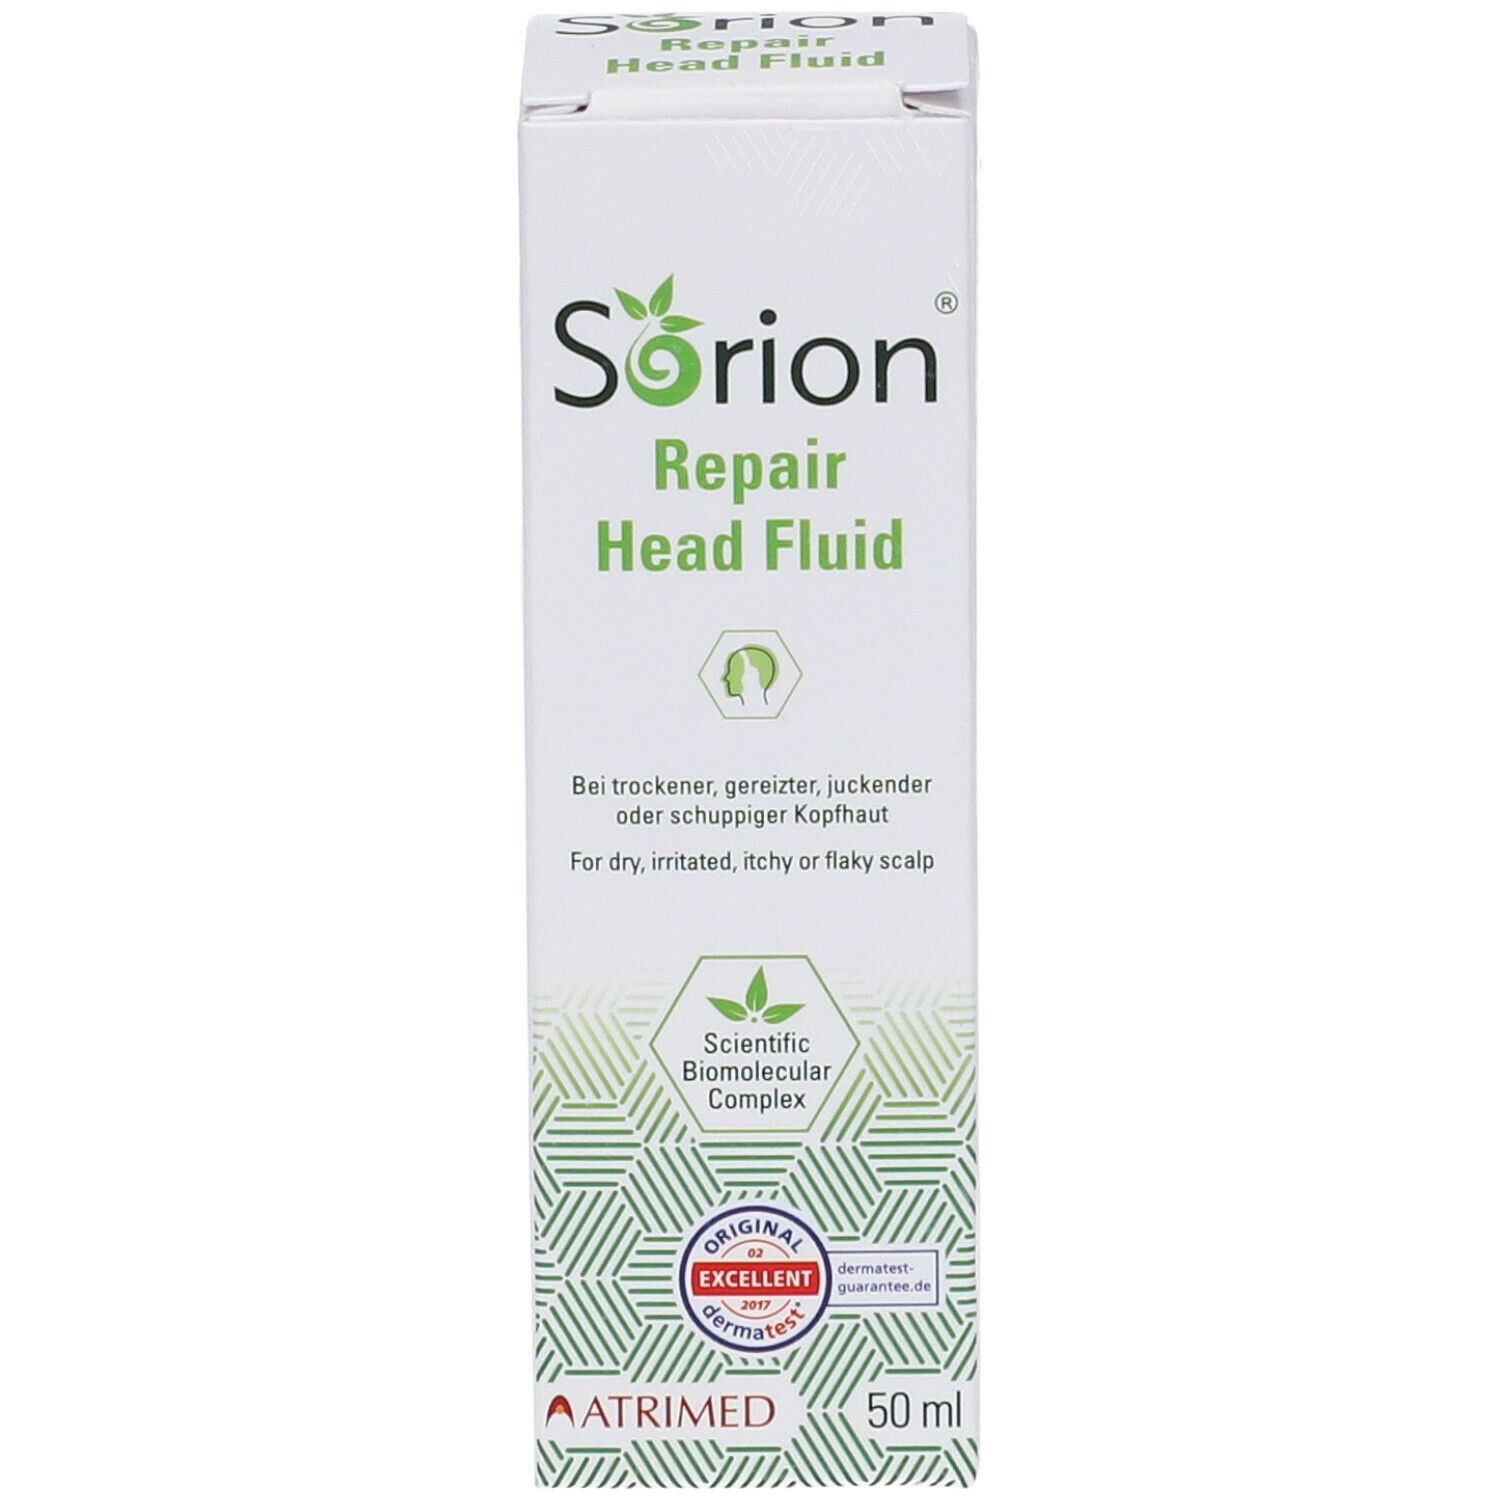 Sorion® Head Fluid